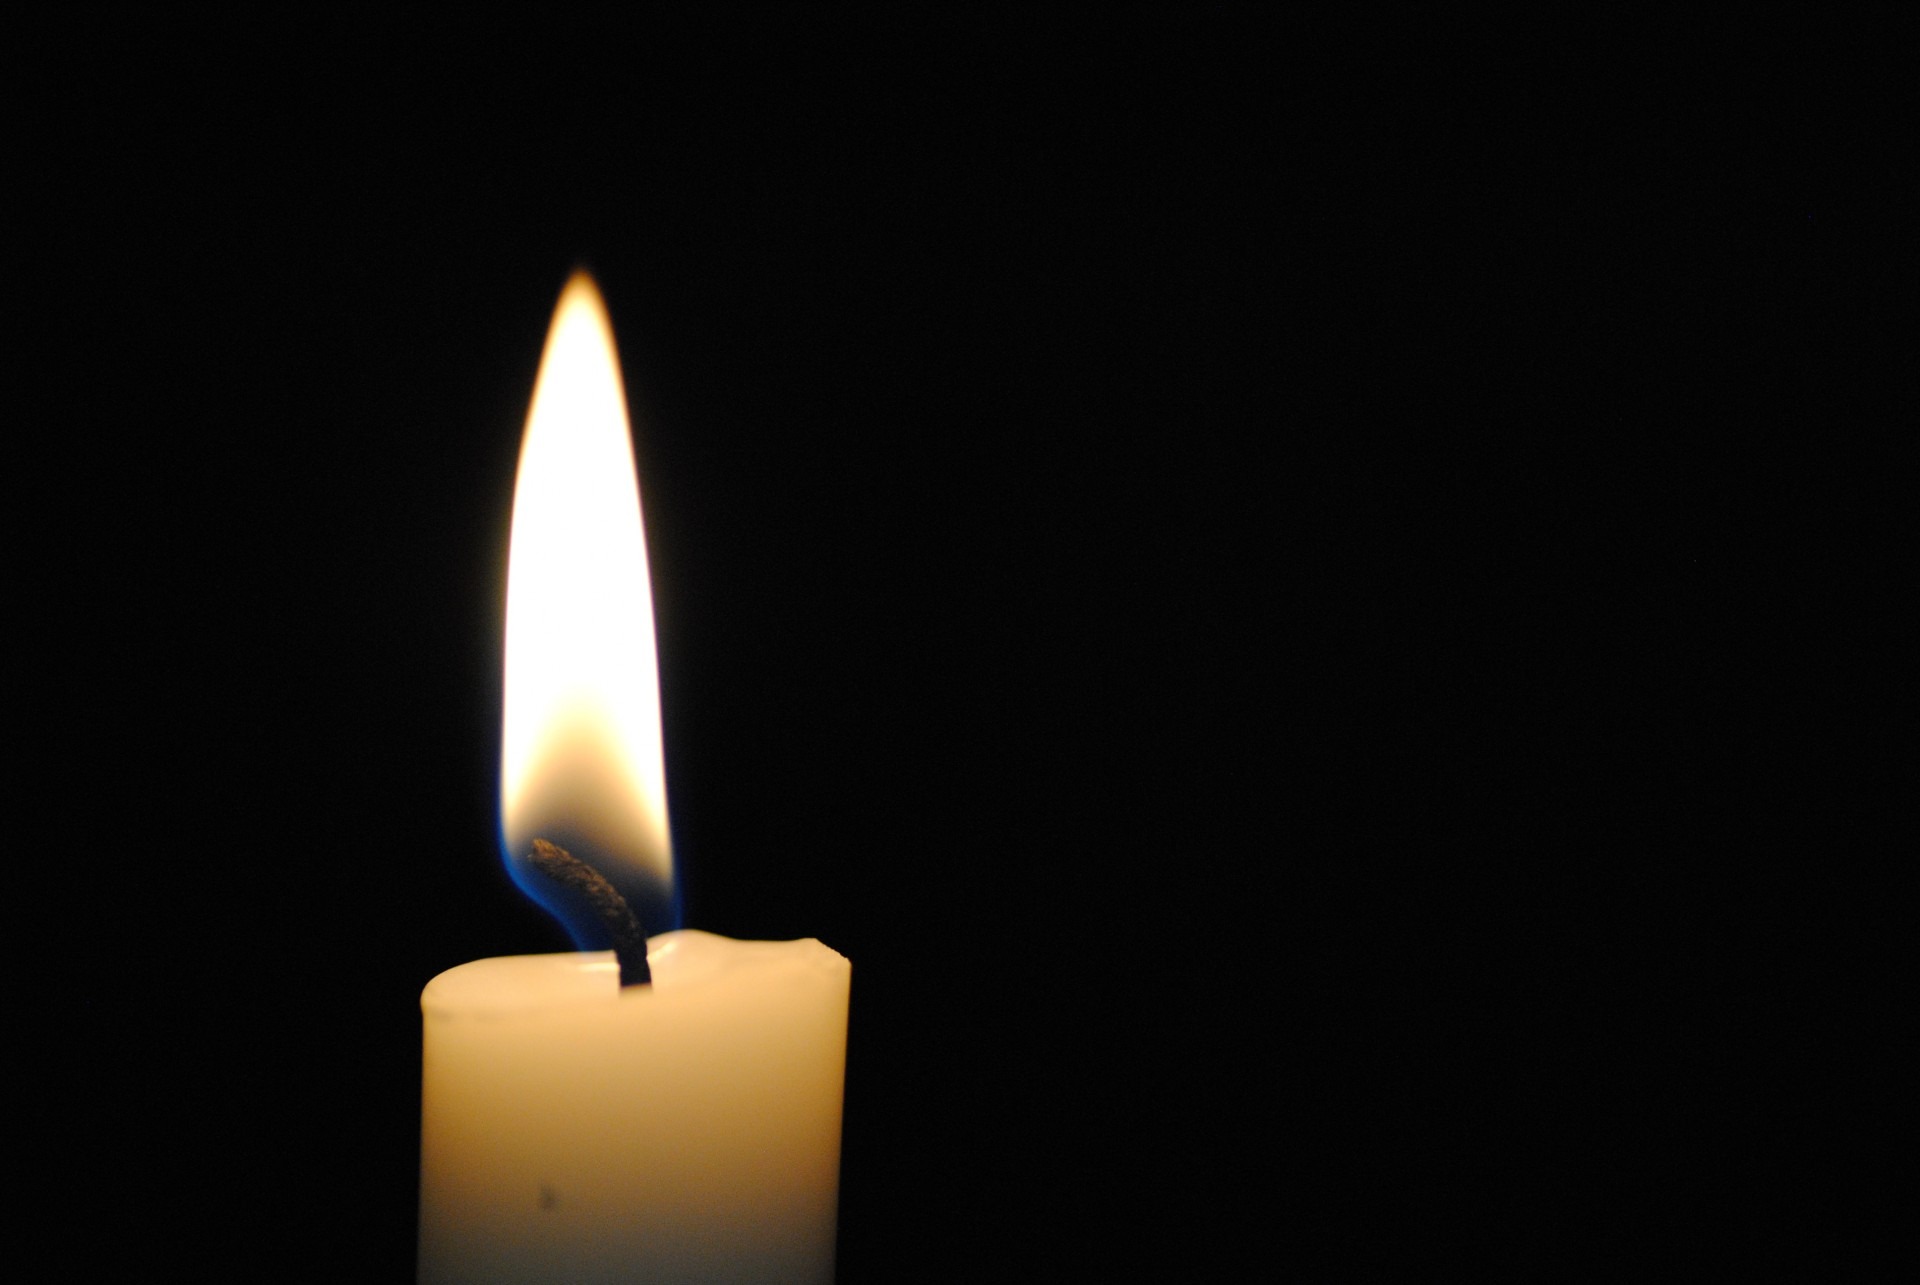 Looking into the Flame: A Hanukkah Light Meditation